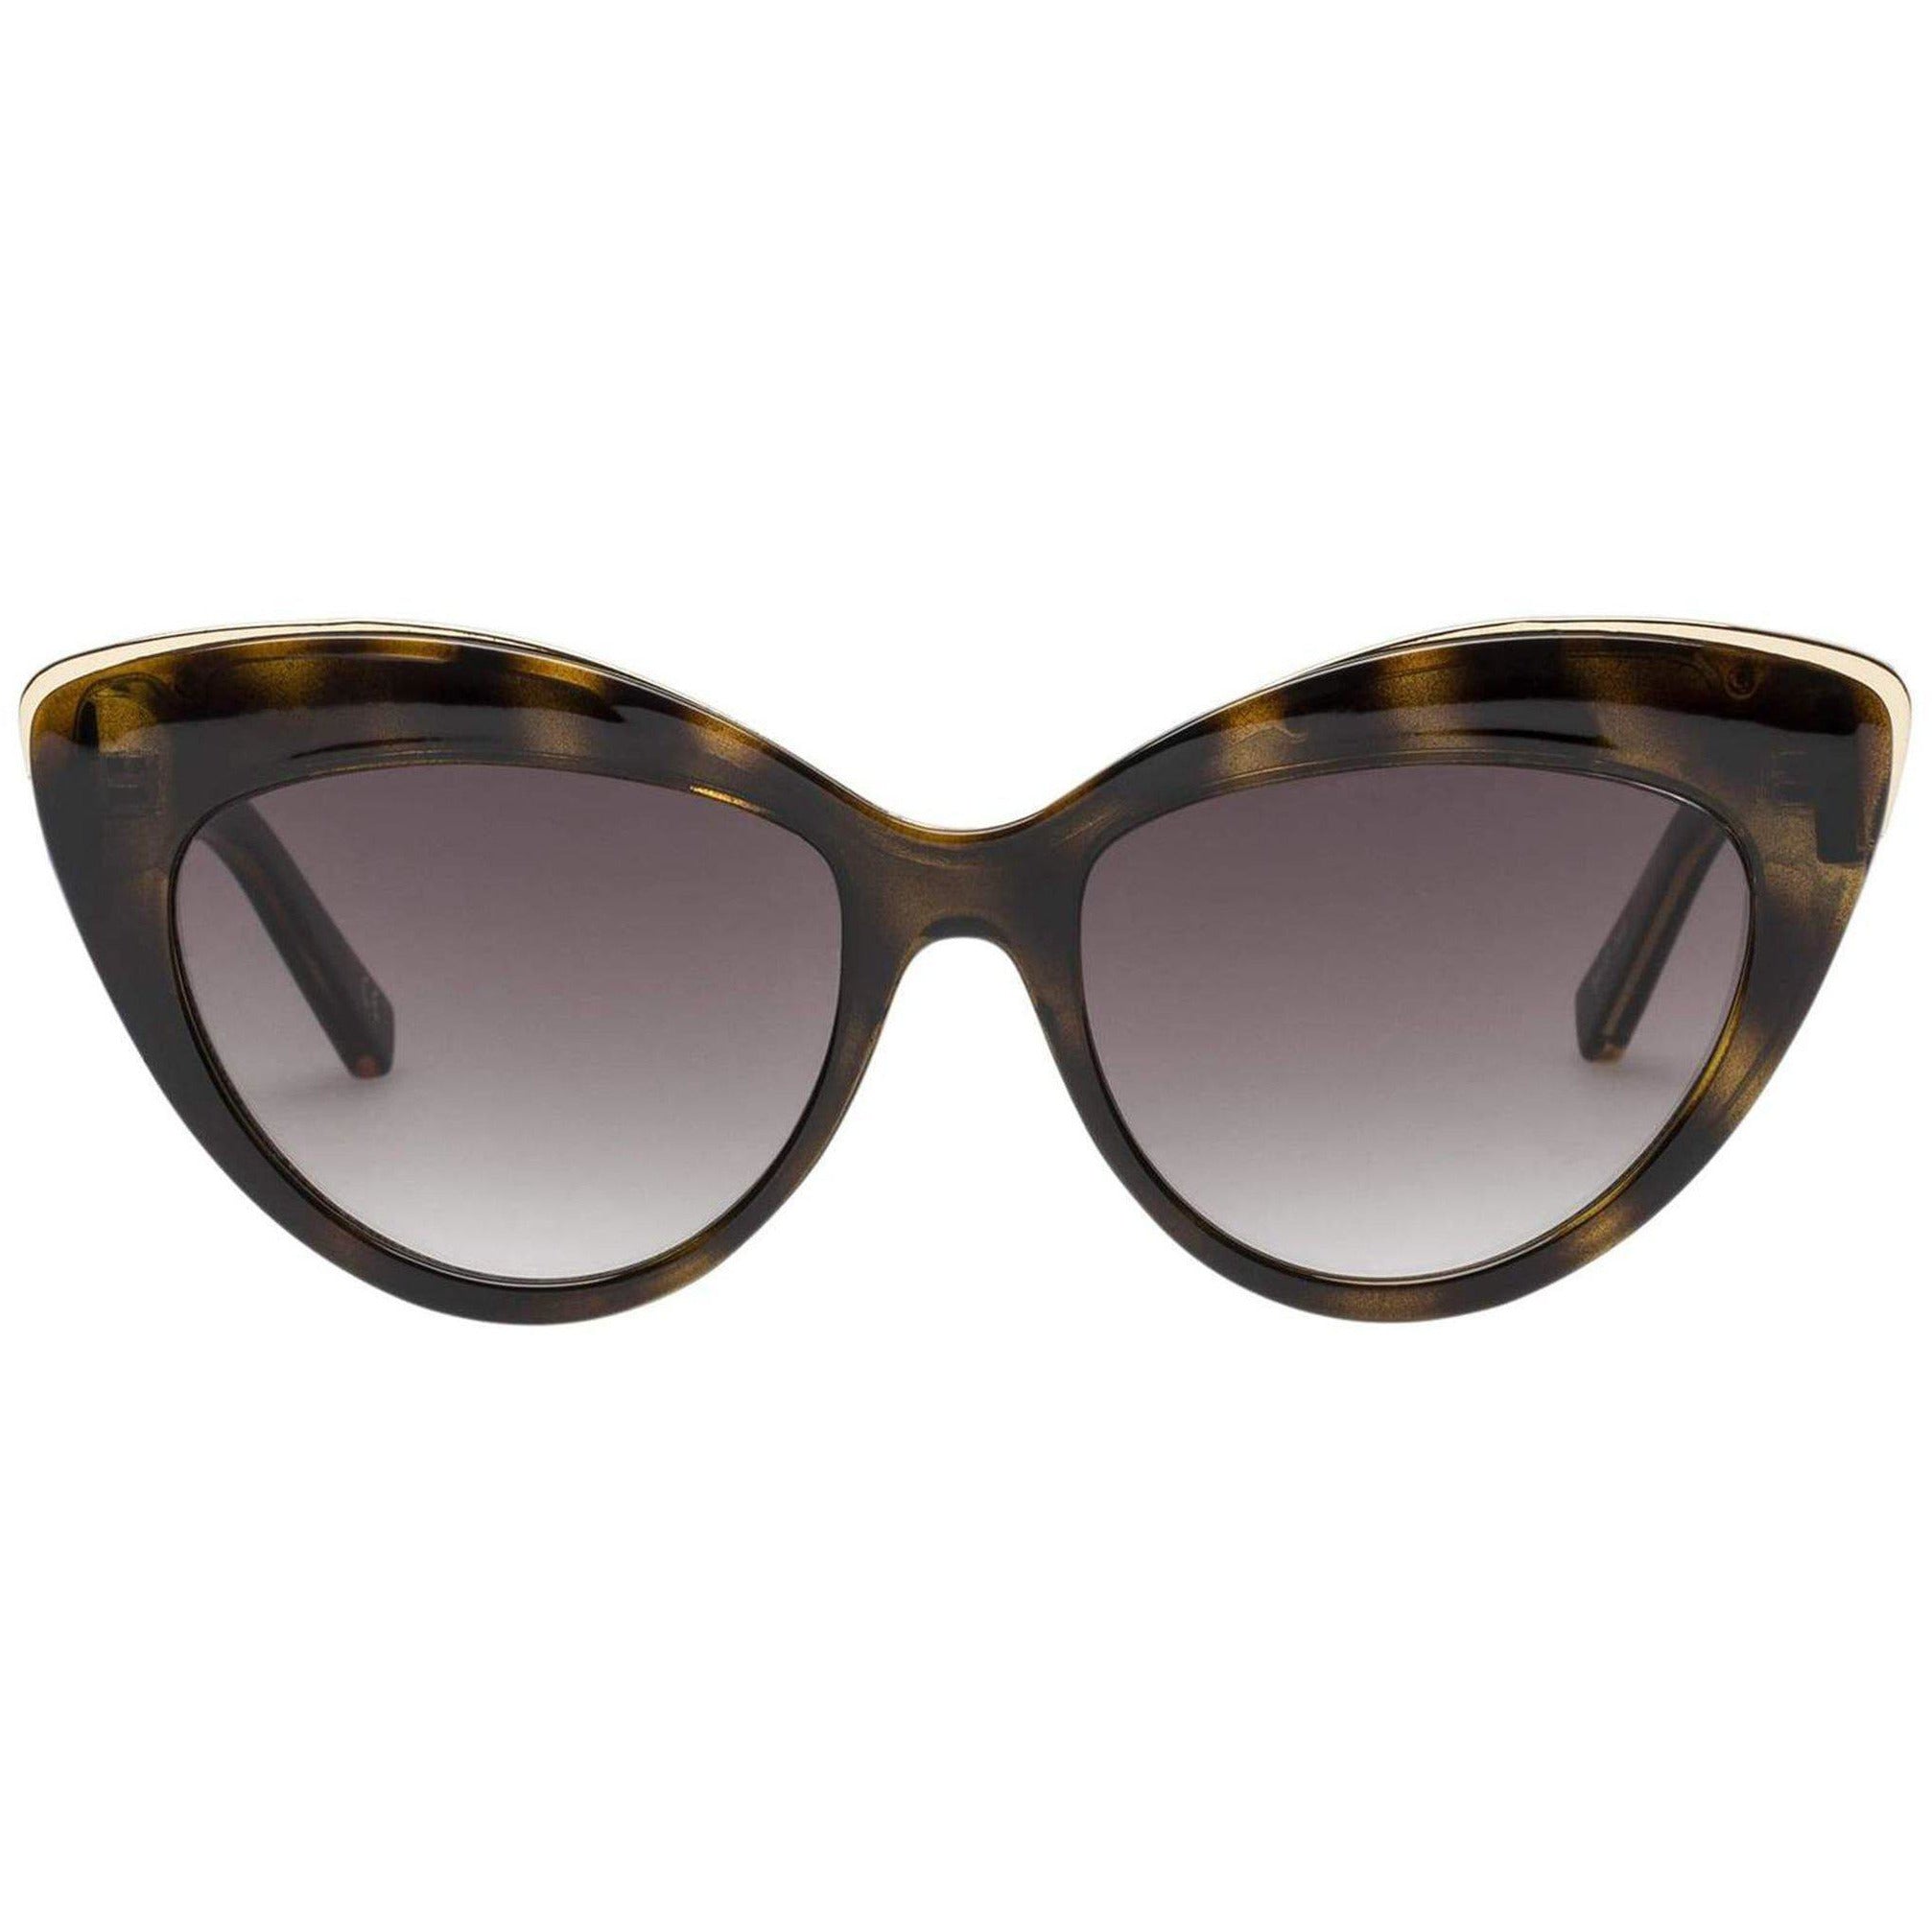 Beautiful Stranger Tort Sunglasses - shop-olivia.com